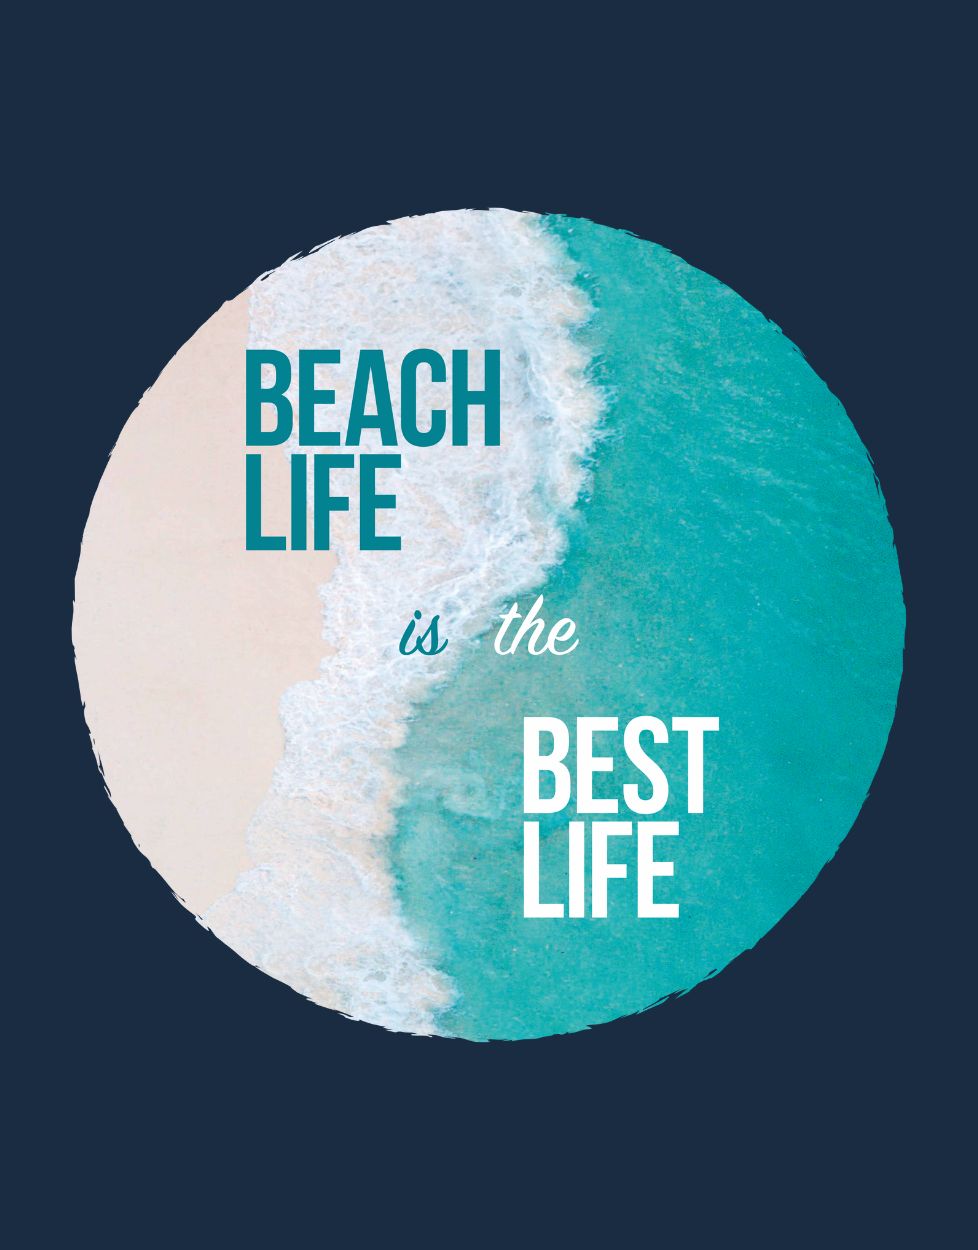 Beach Life T-Shirt